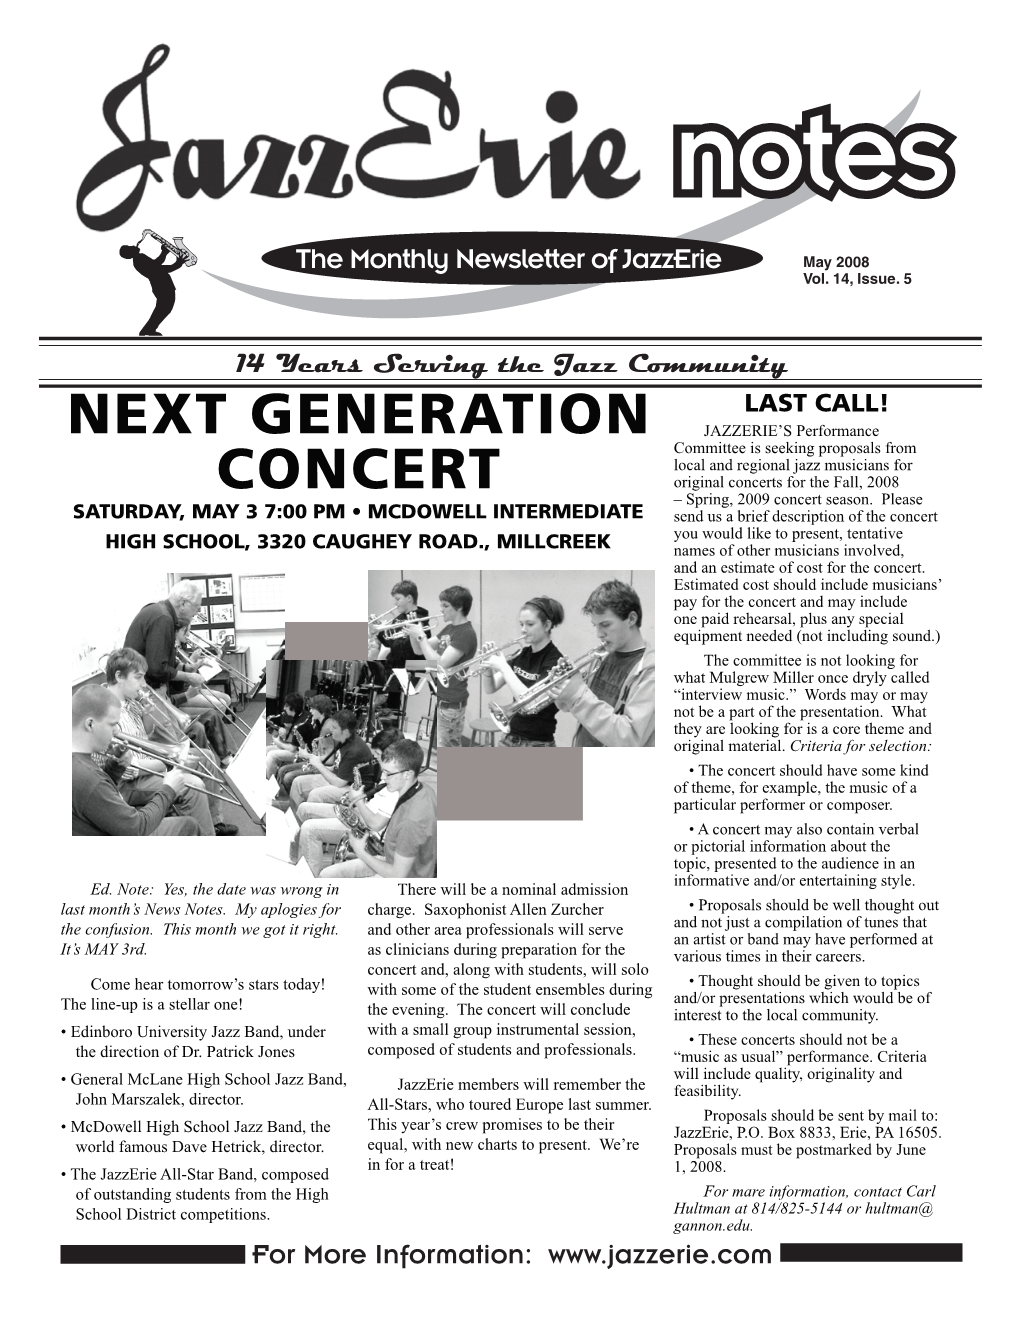 Next Generation Concert